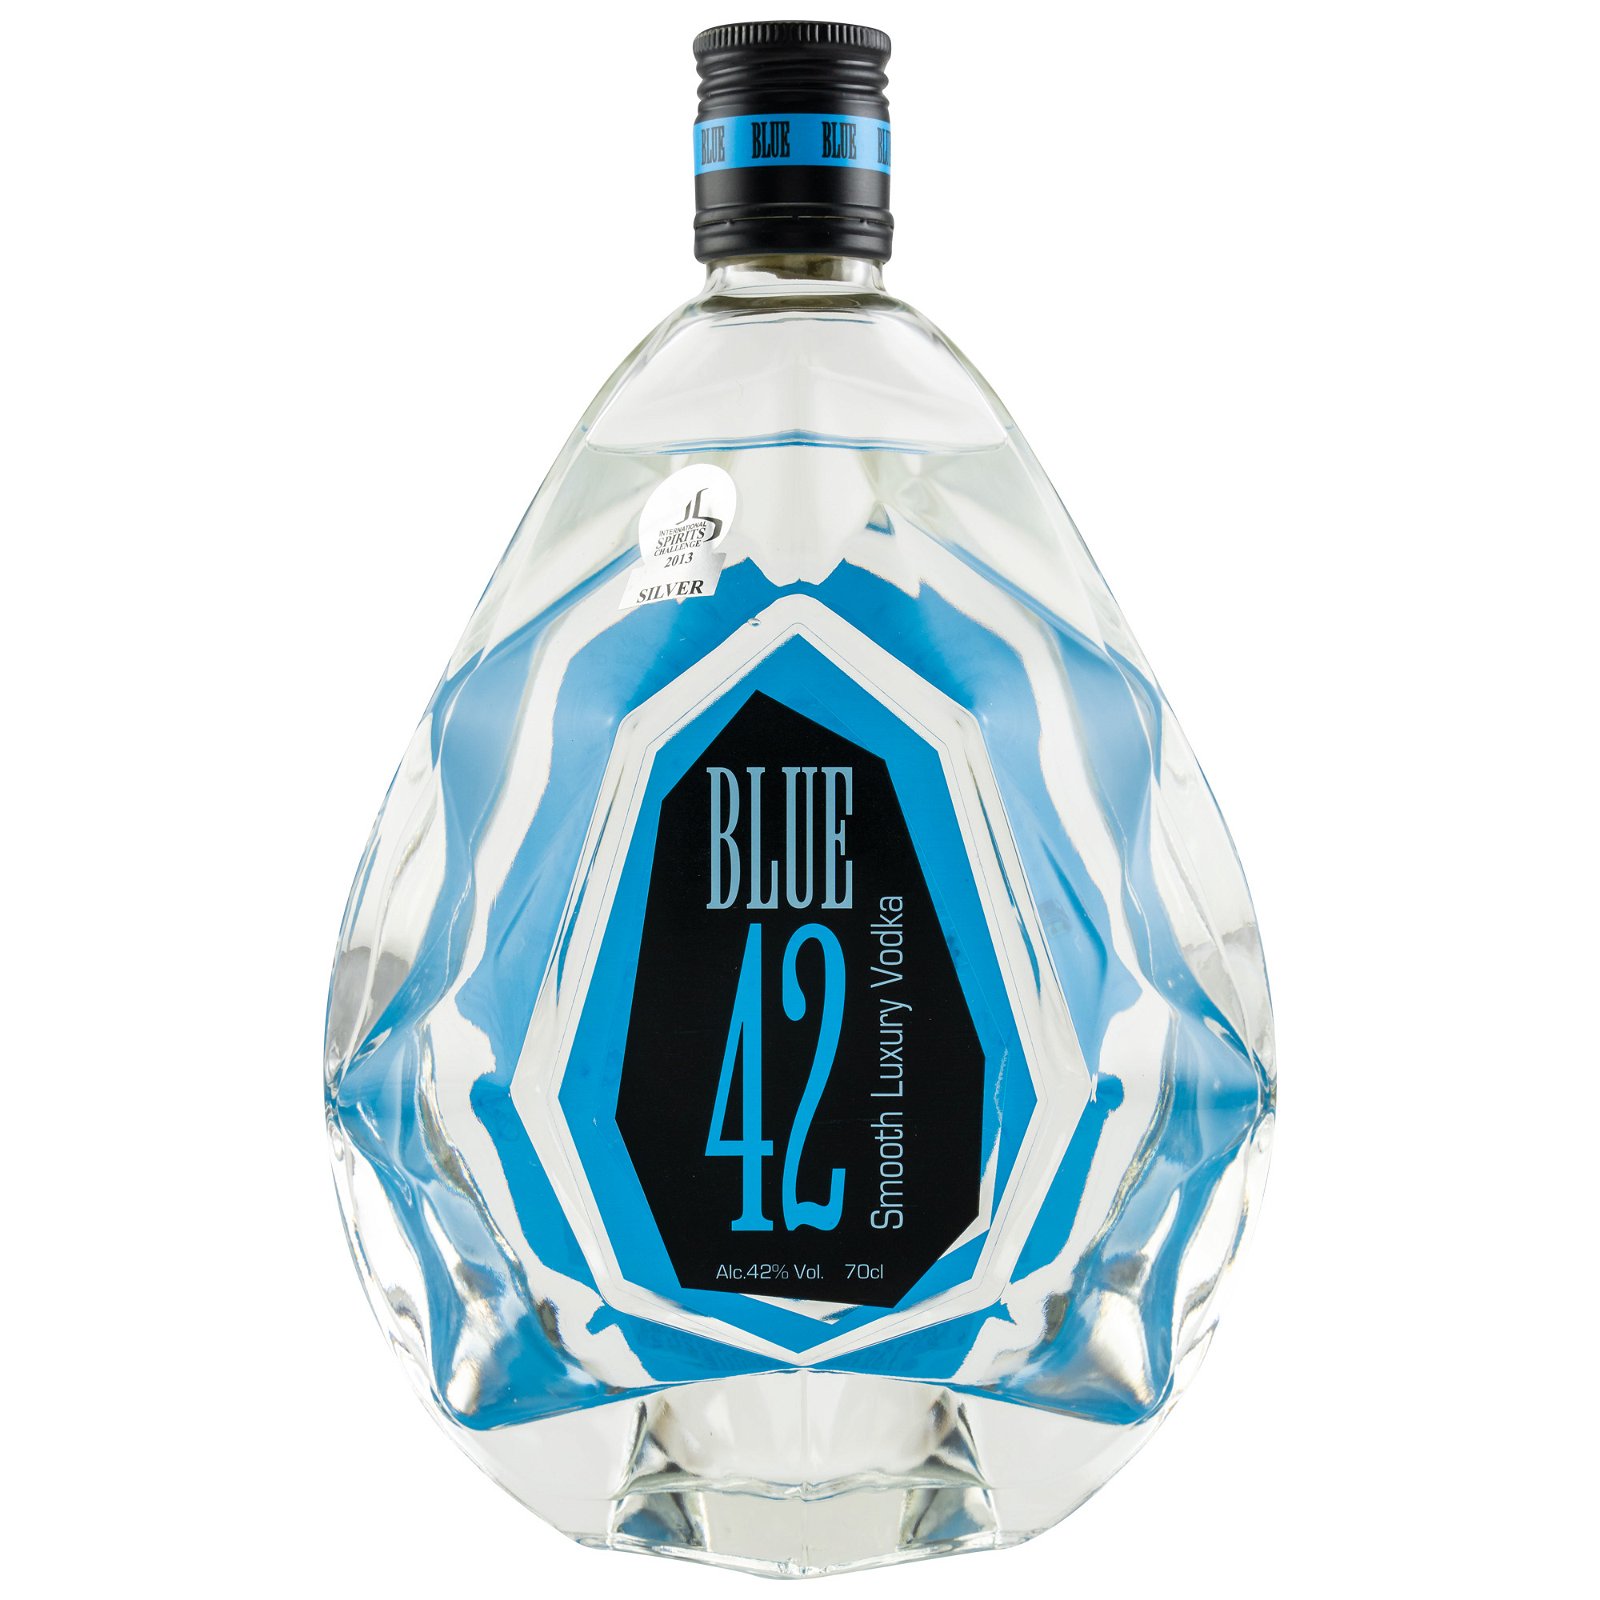 Blue 42 Vodka 